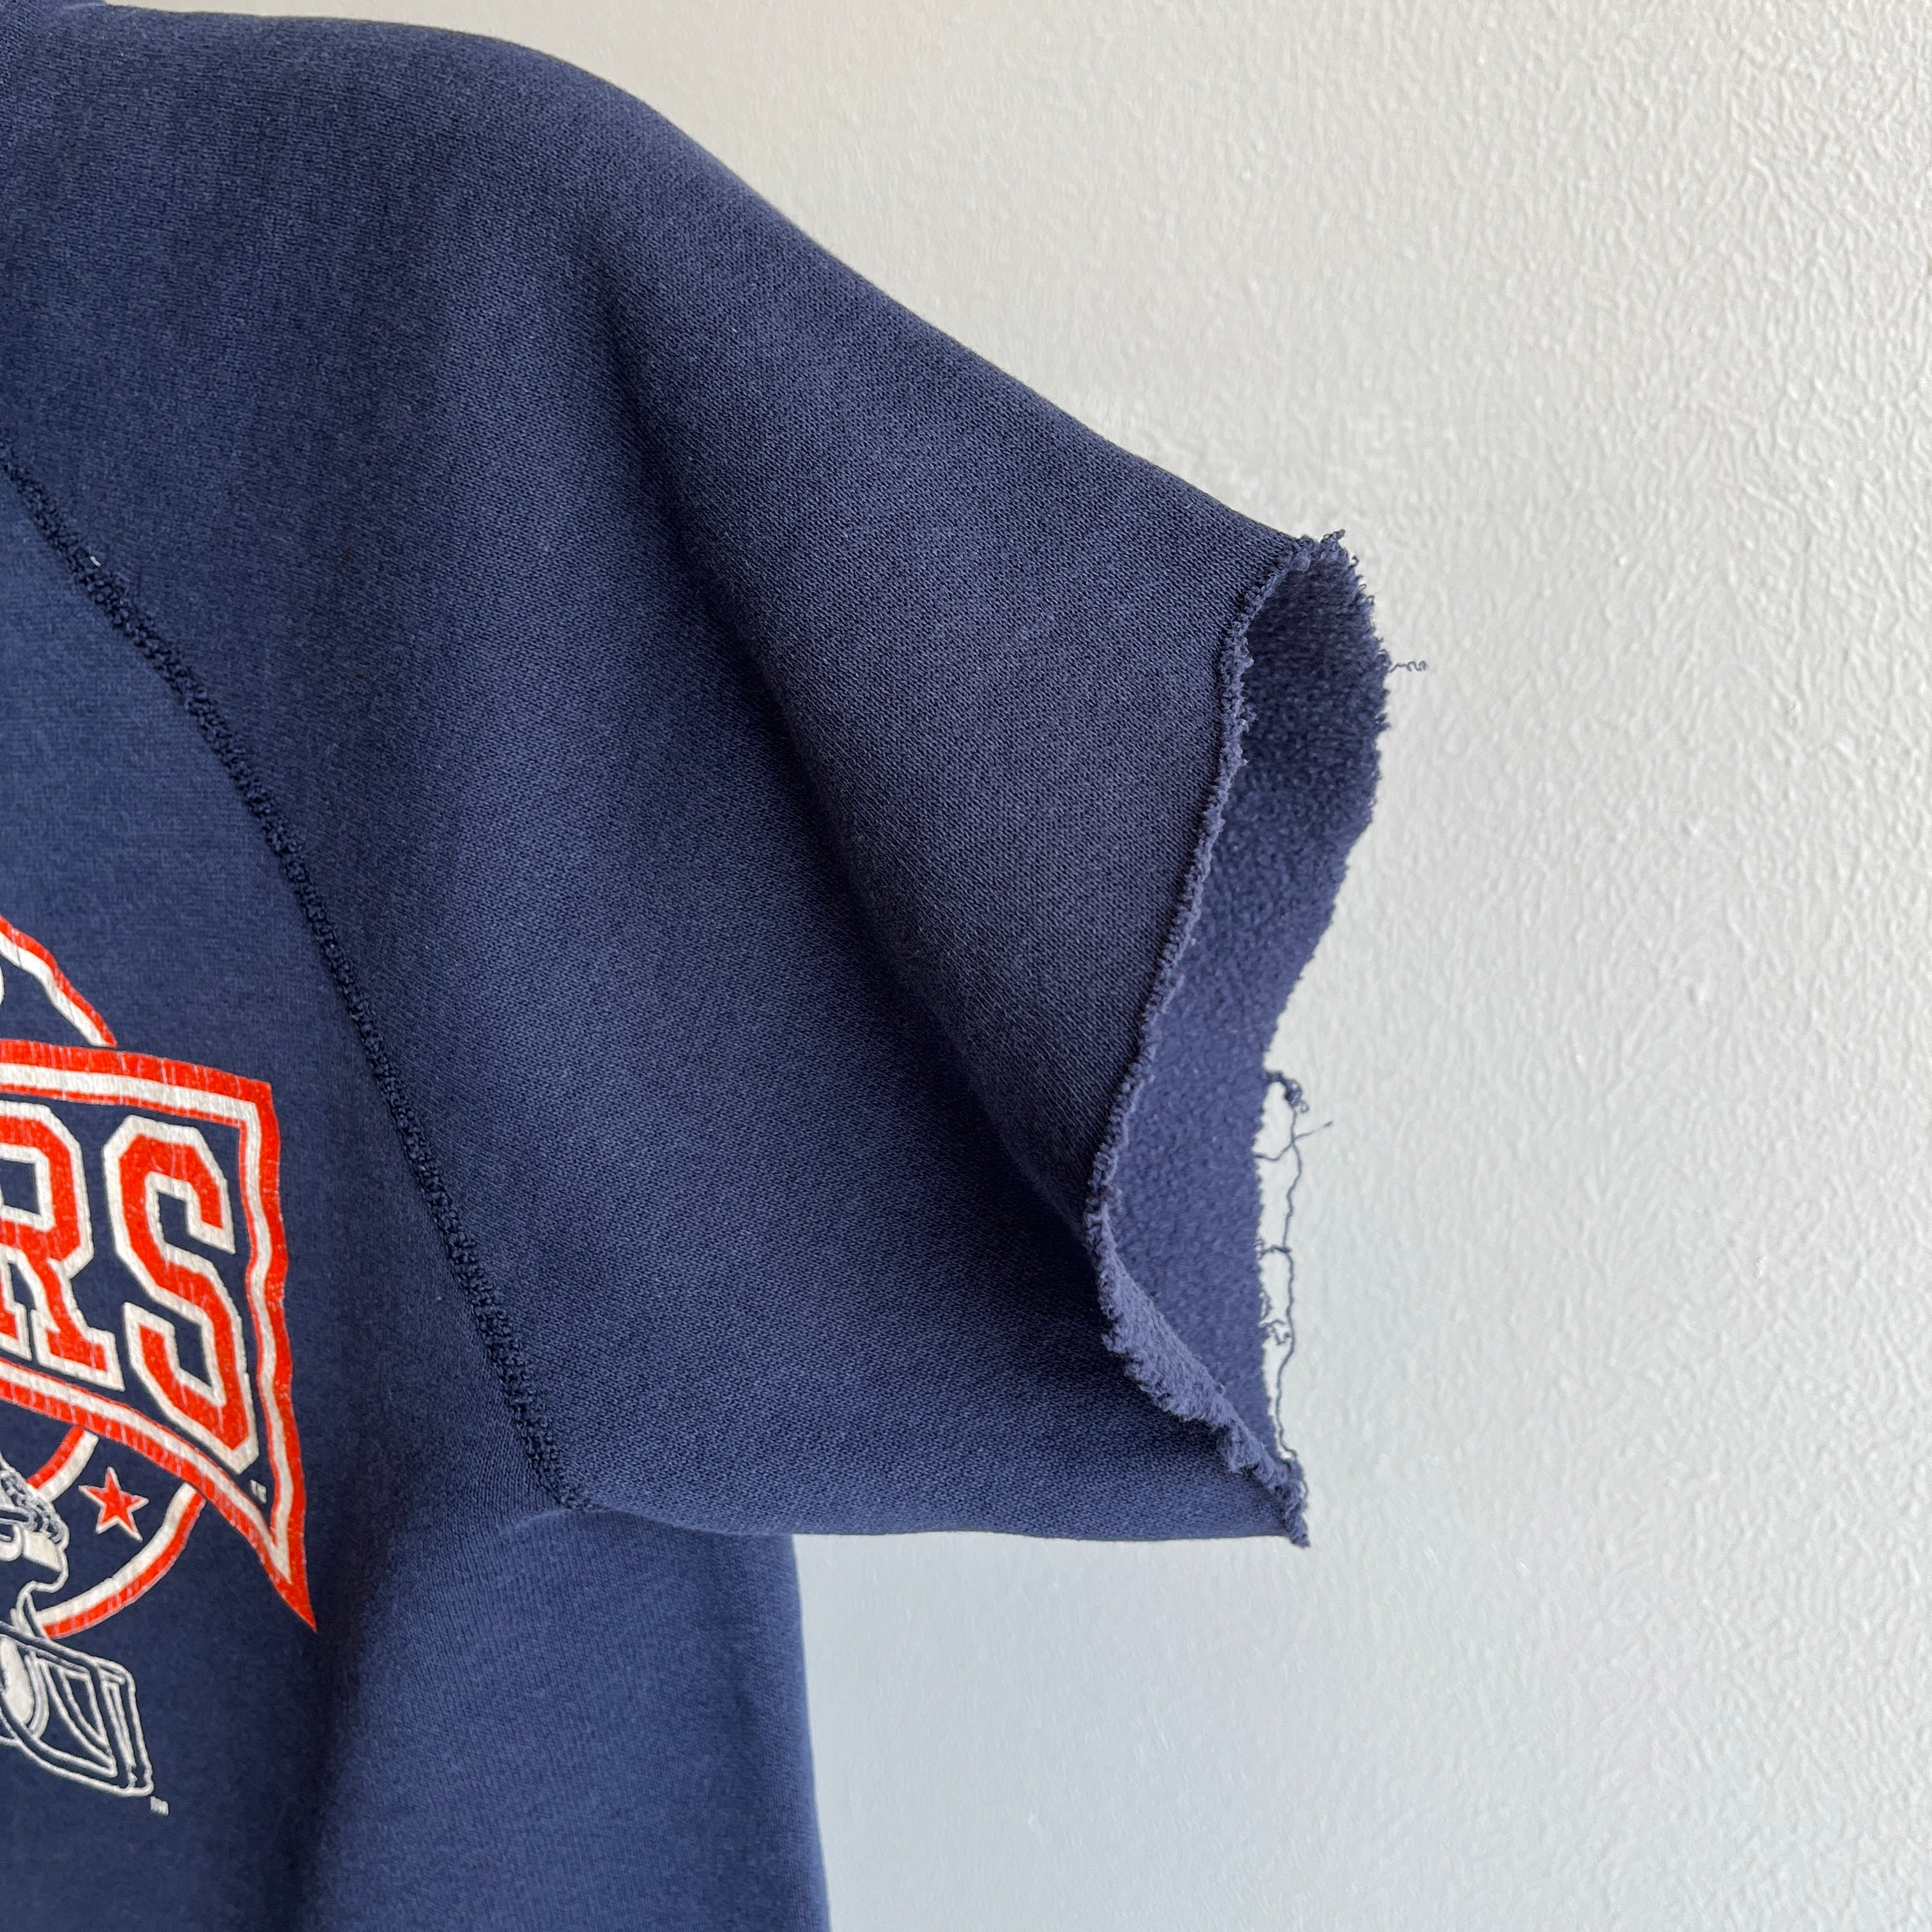 1980s (Early) Chicago Bears DIY Warm Up Sweatshirt by Artex